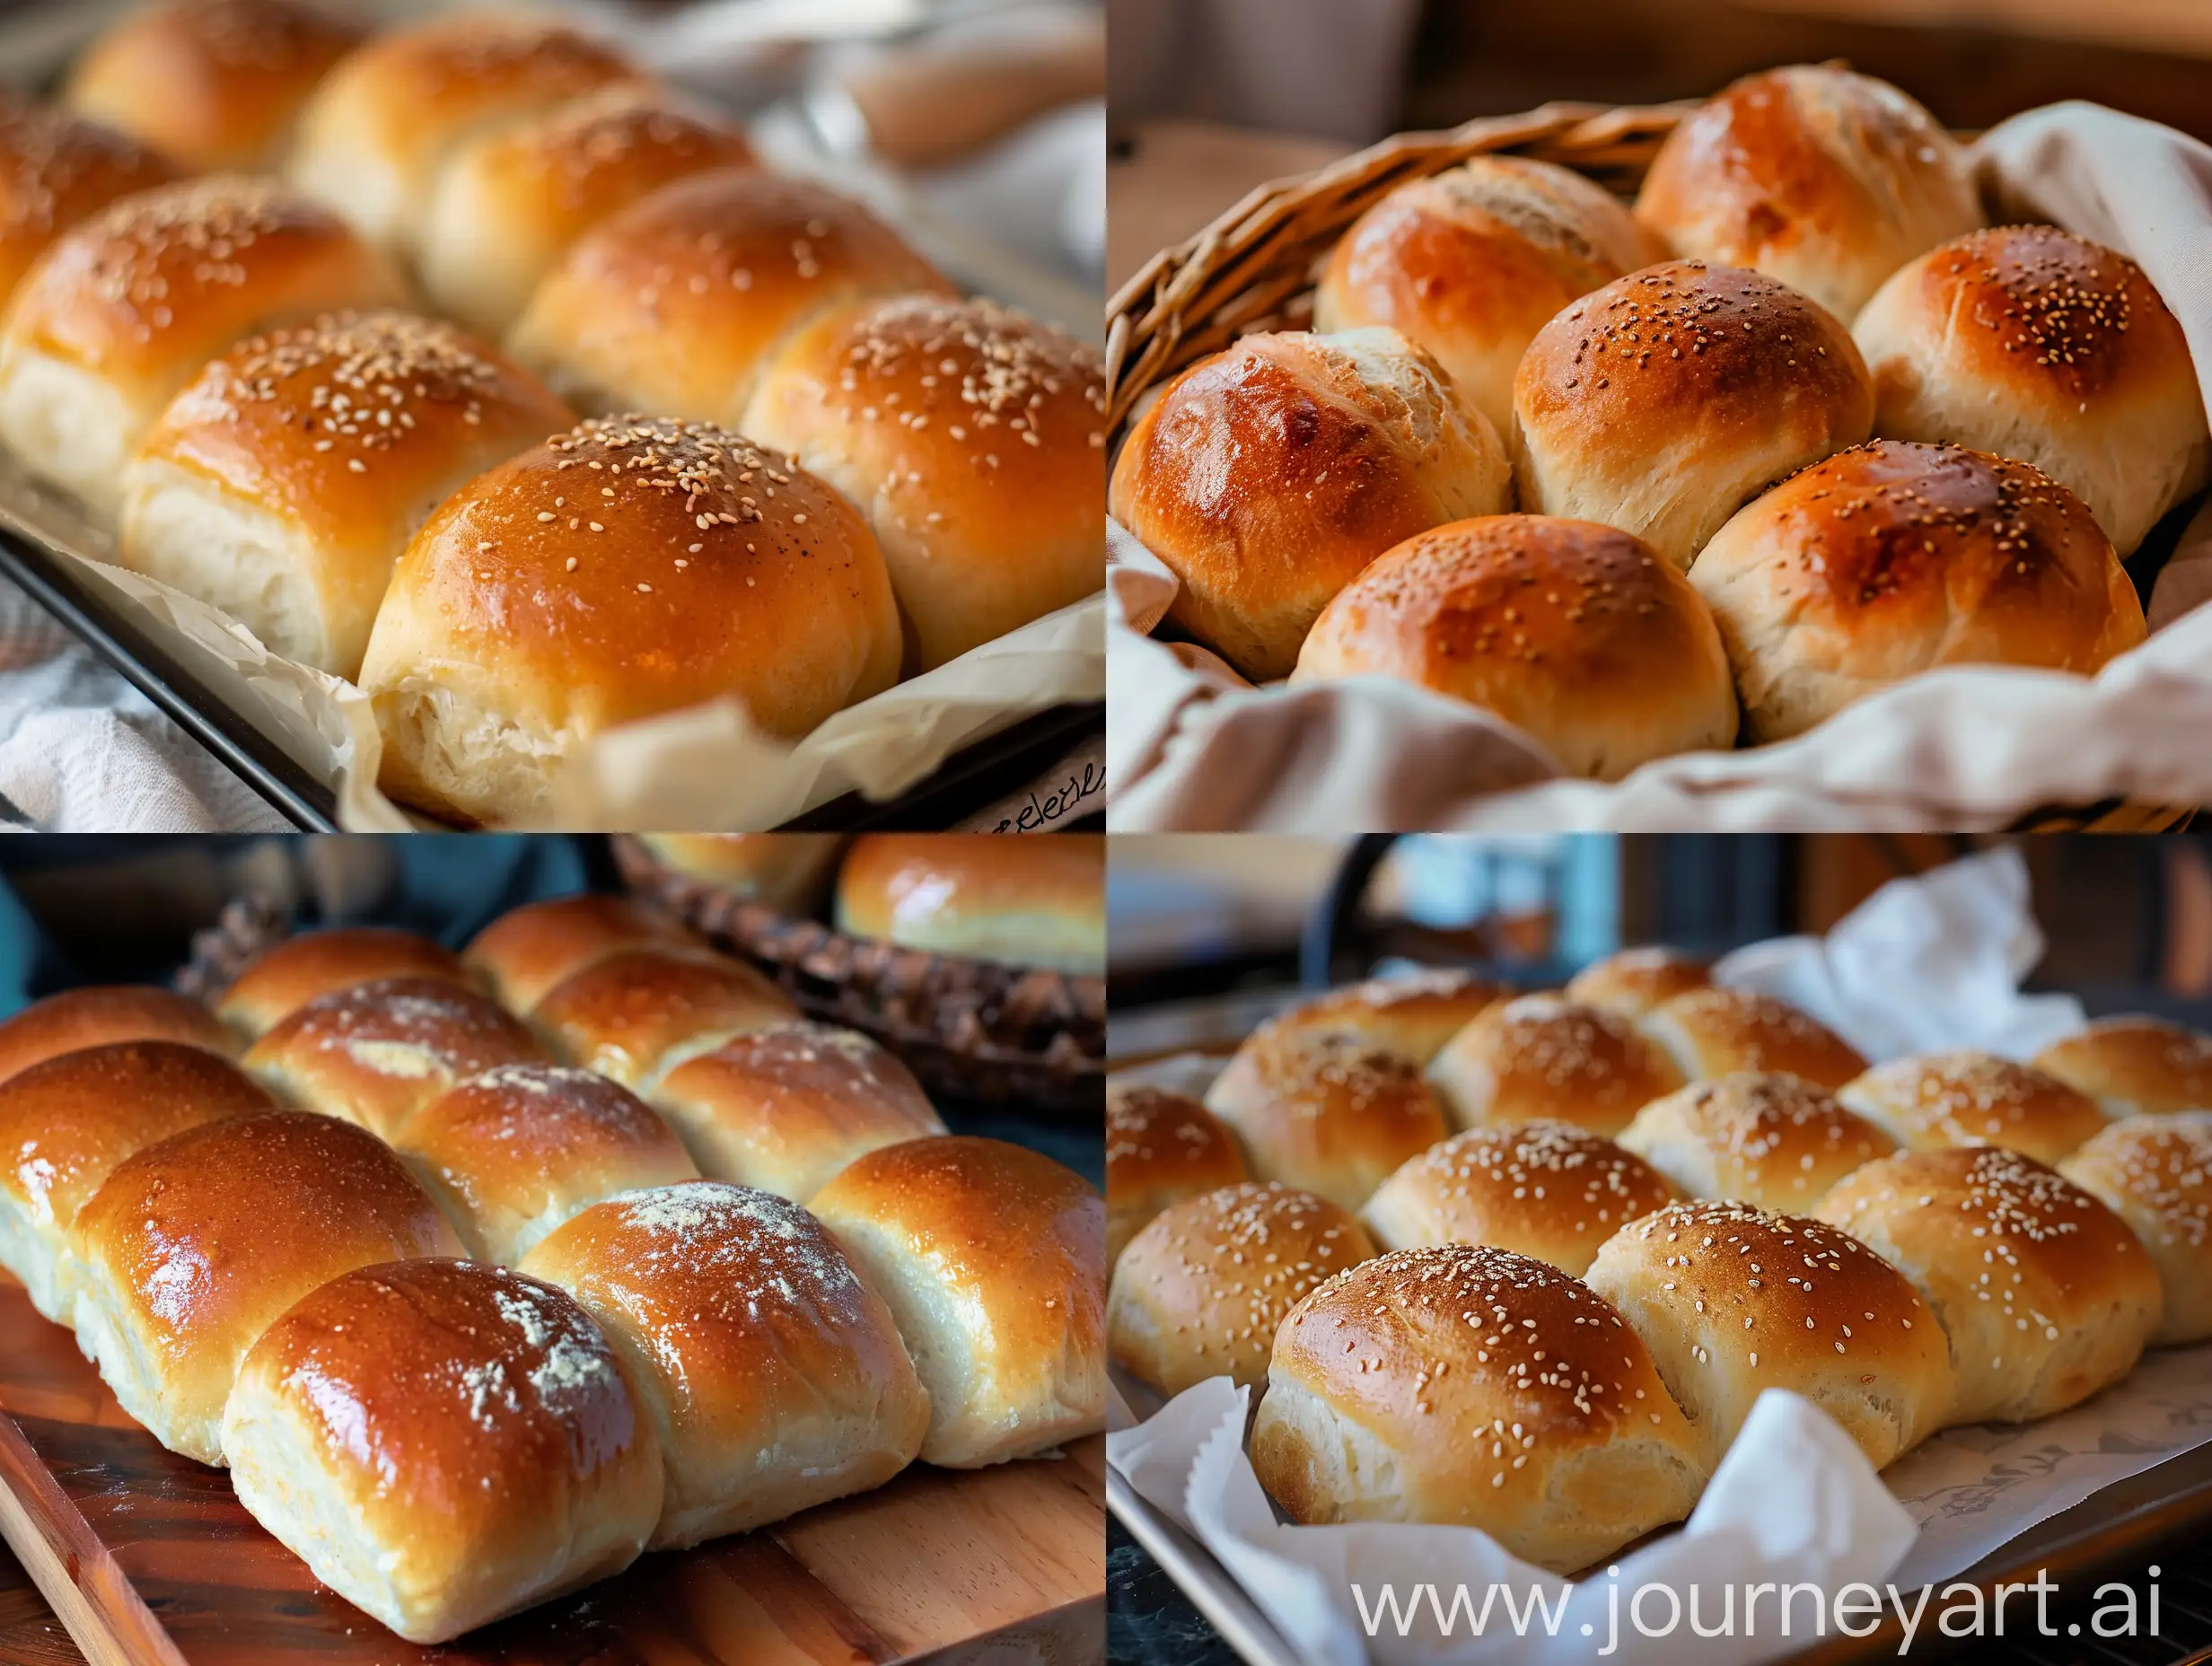 Delicious-Artisan-Bread-Rolls-A-Culinary-Tale-in-Vibrant-43-Visuals